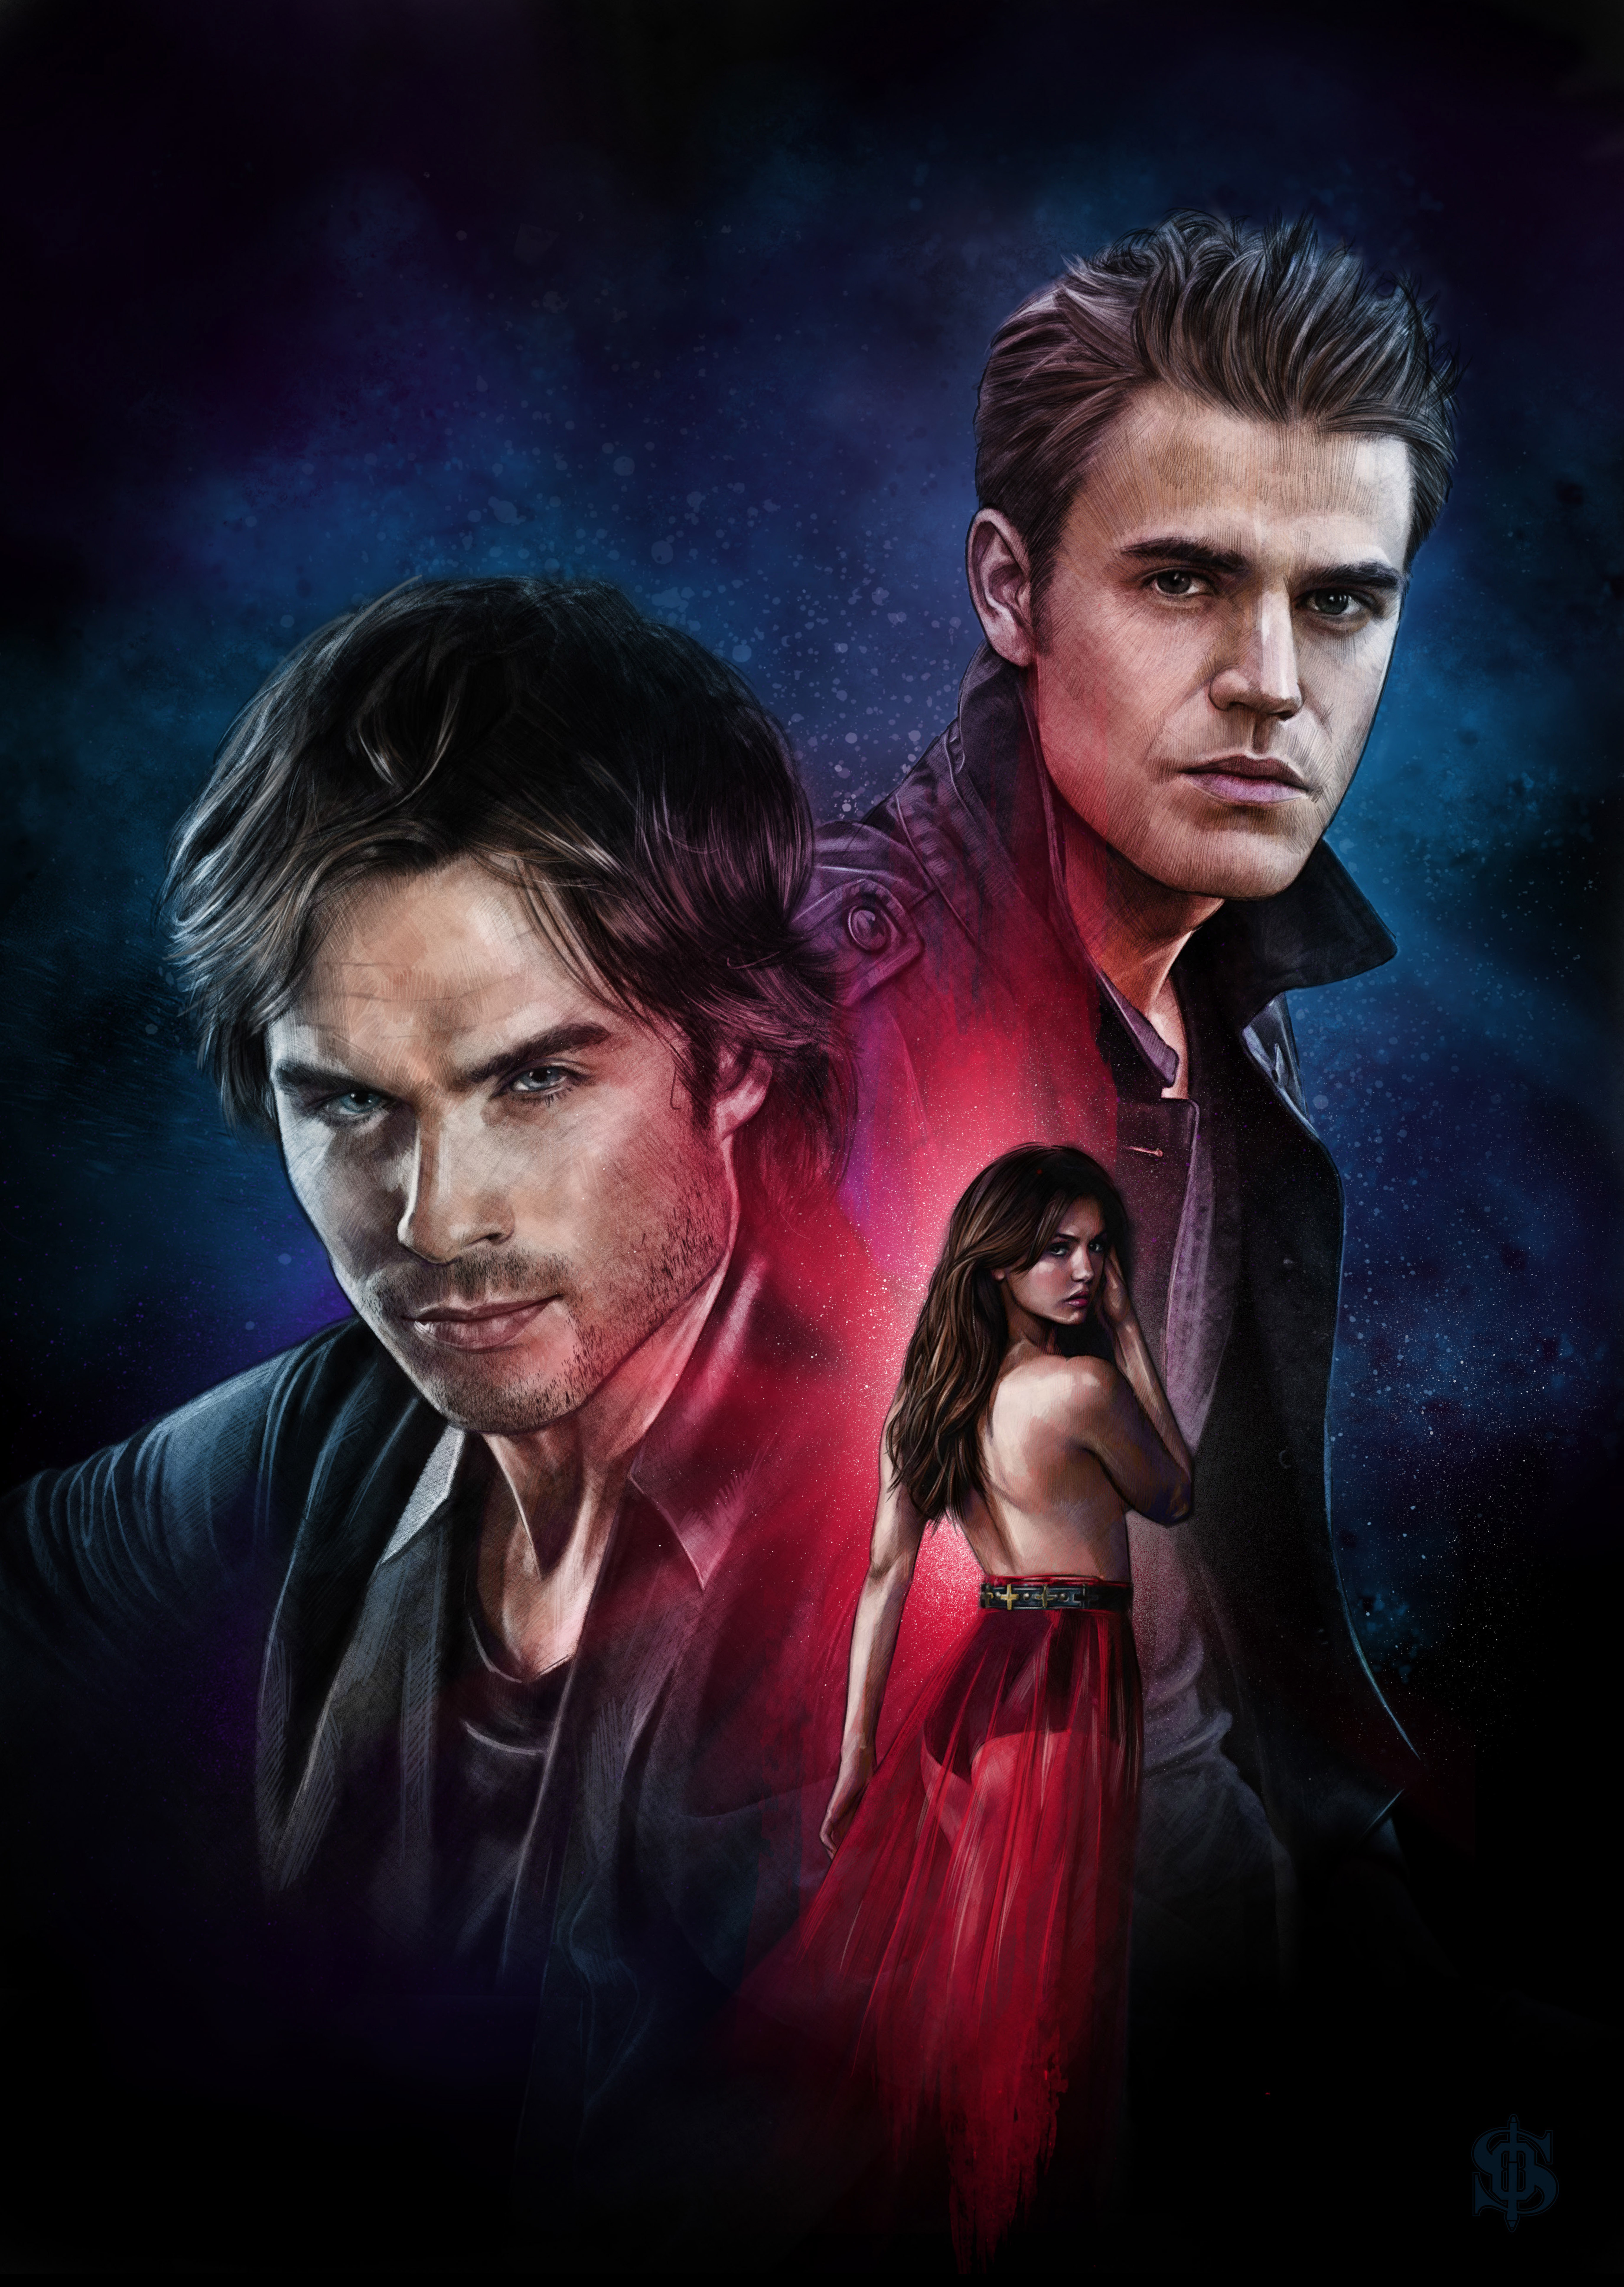 The Vampire Diaries - Season 5 Poster